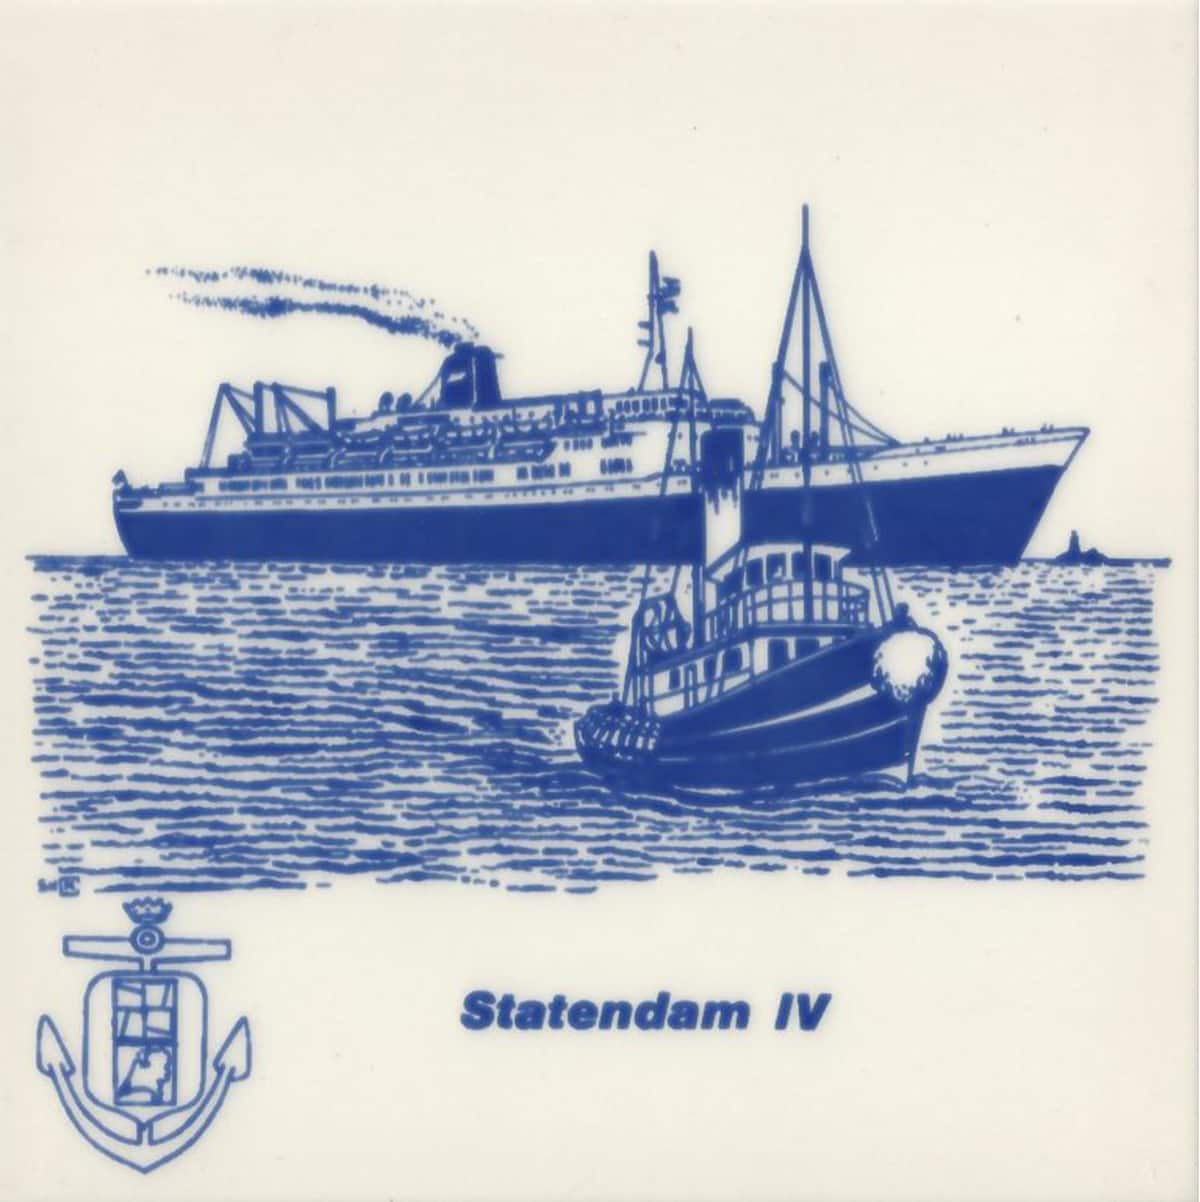 Holland America Line commemorative tile, Statendam IV, 1978